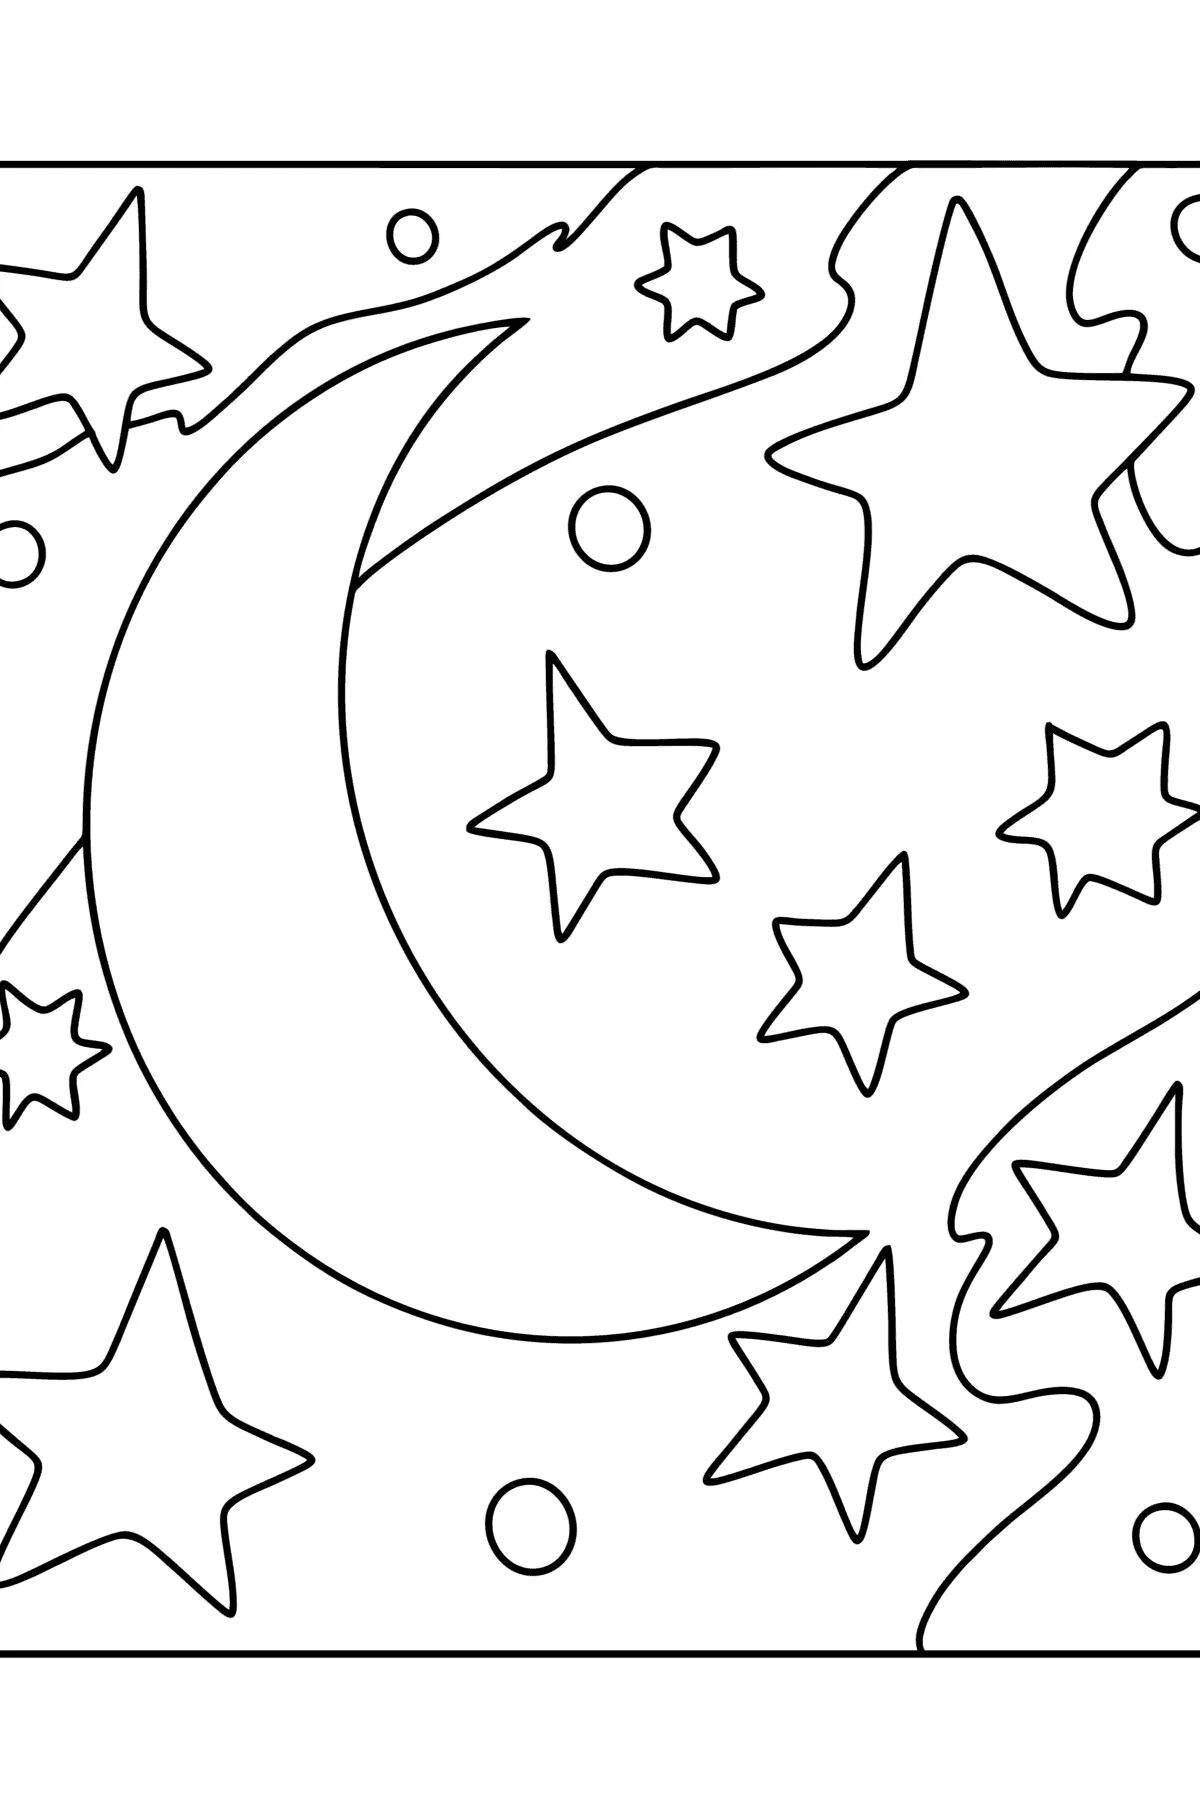 Moon and stars #5